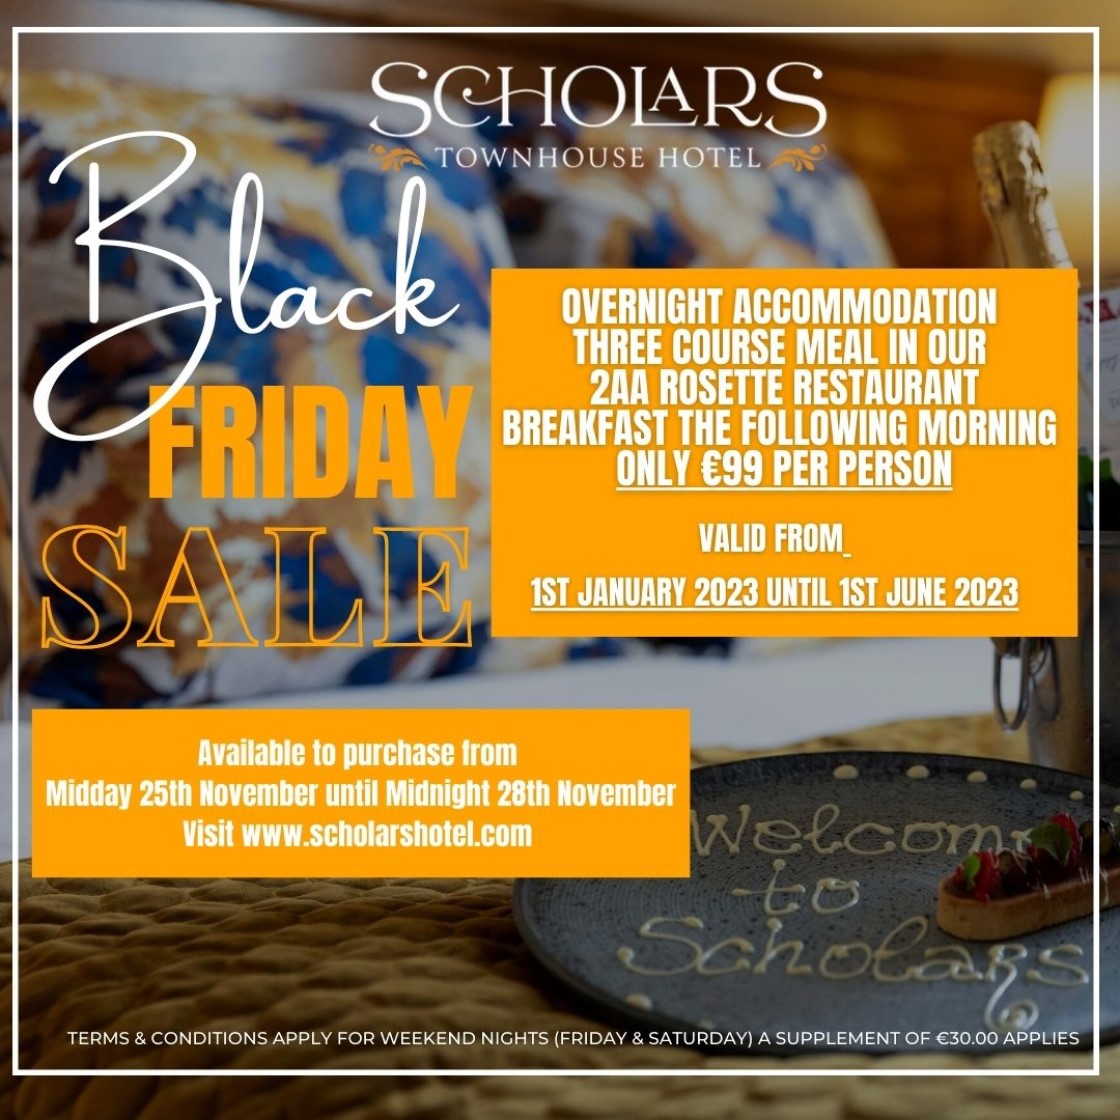 Black Friday_Scholars Townhouse Hotel